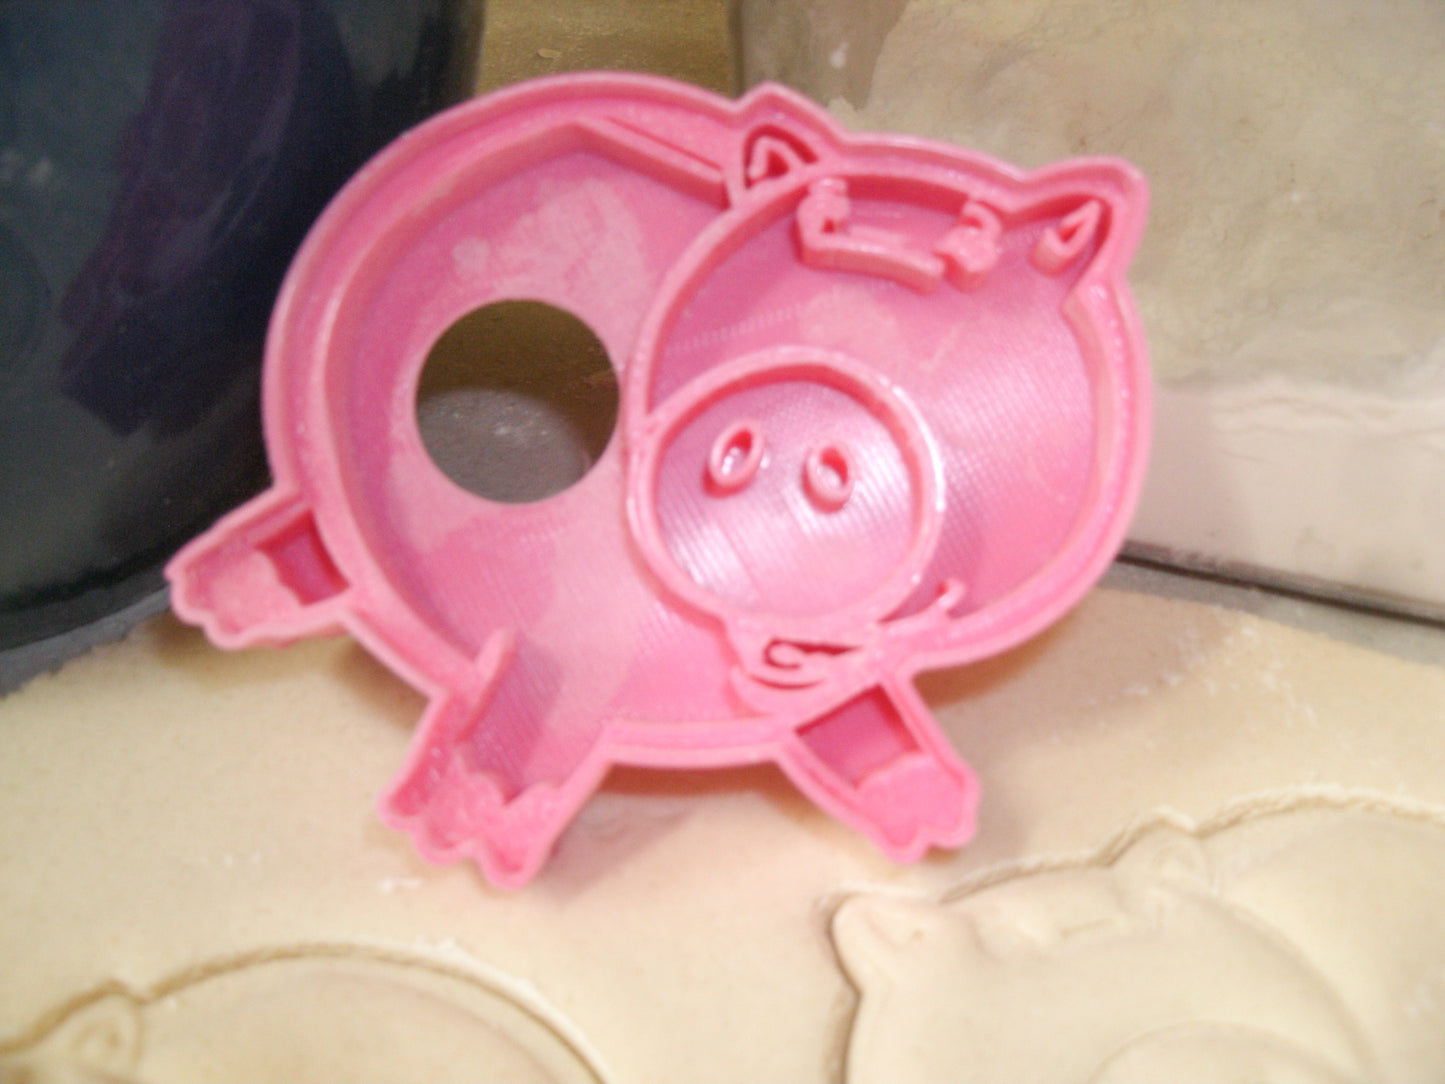 Hamm Toy Story Piggy Bank Cartoon Disney Movie Cookie Cutter Made In USA PR510